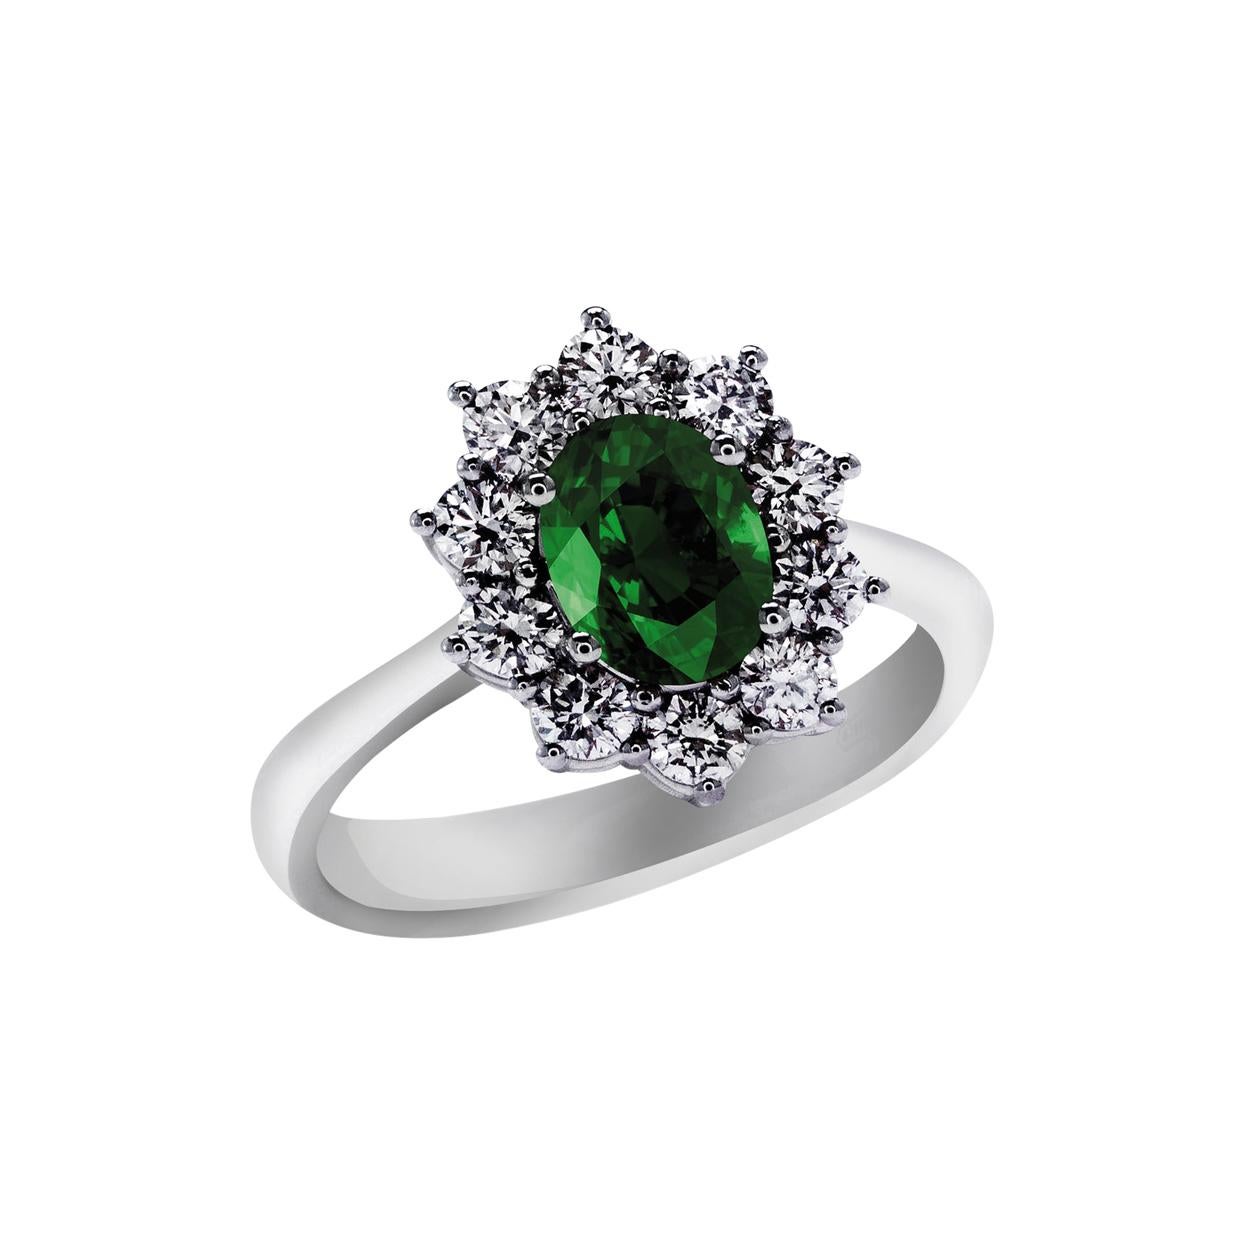 1.20 Carat Colombian Emerald & 0.81 Carat Diamonds set in 18Kt White Gold Ring